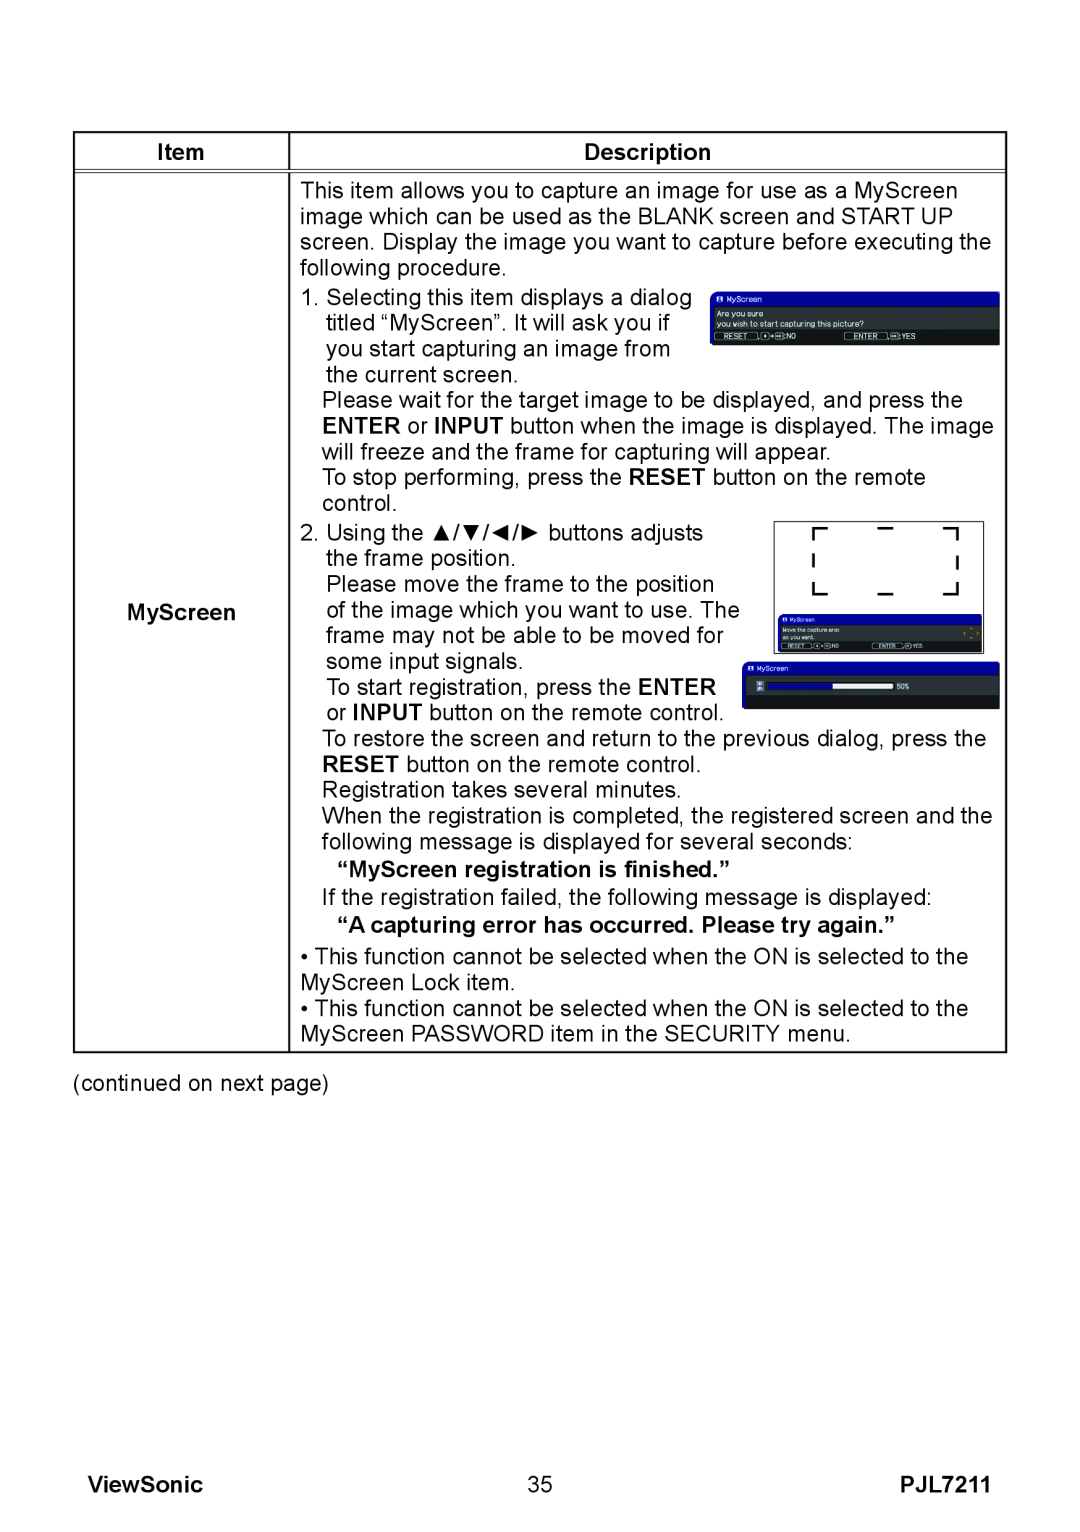 ViewSonic PJL7211 manual Item, Description, “MyScreen registration is finished.”, ViewSonic 